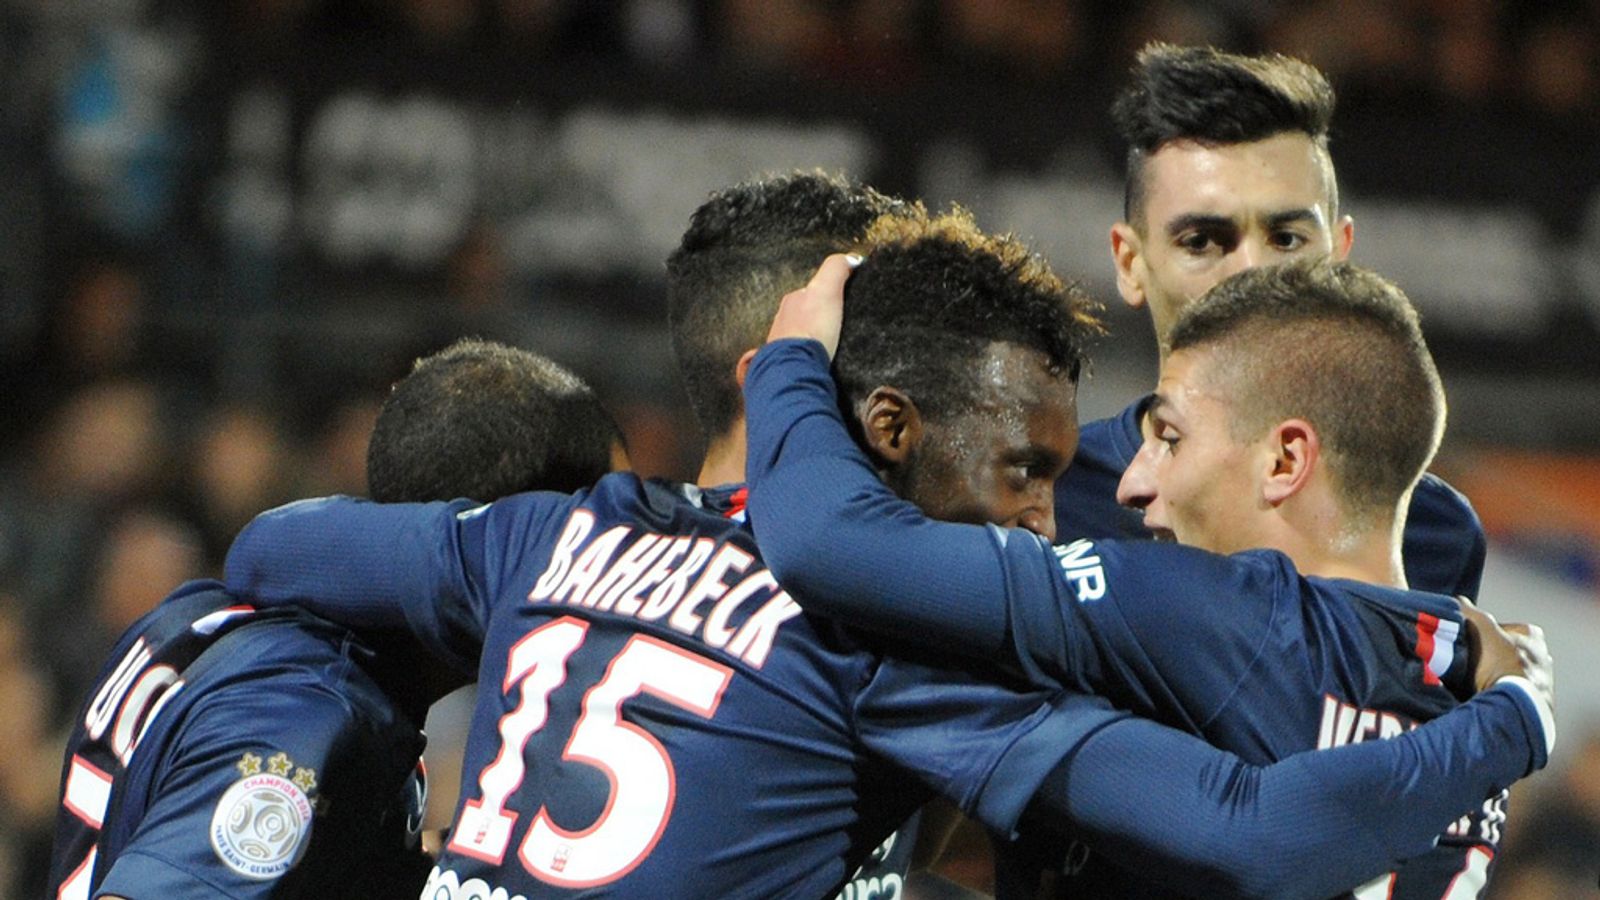 Lorient 1 - 2 PSG - Match Report & Highlights